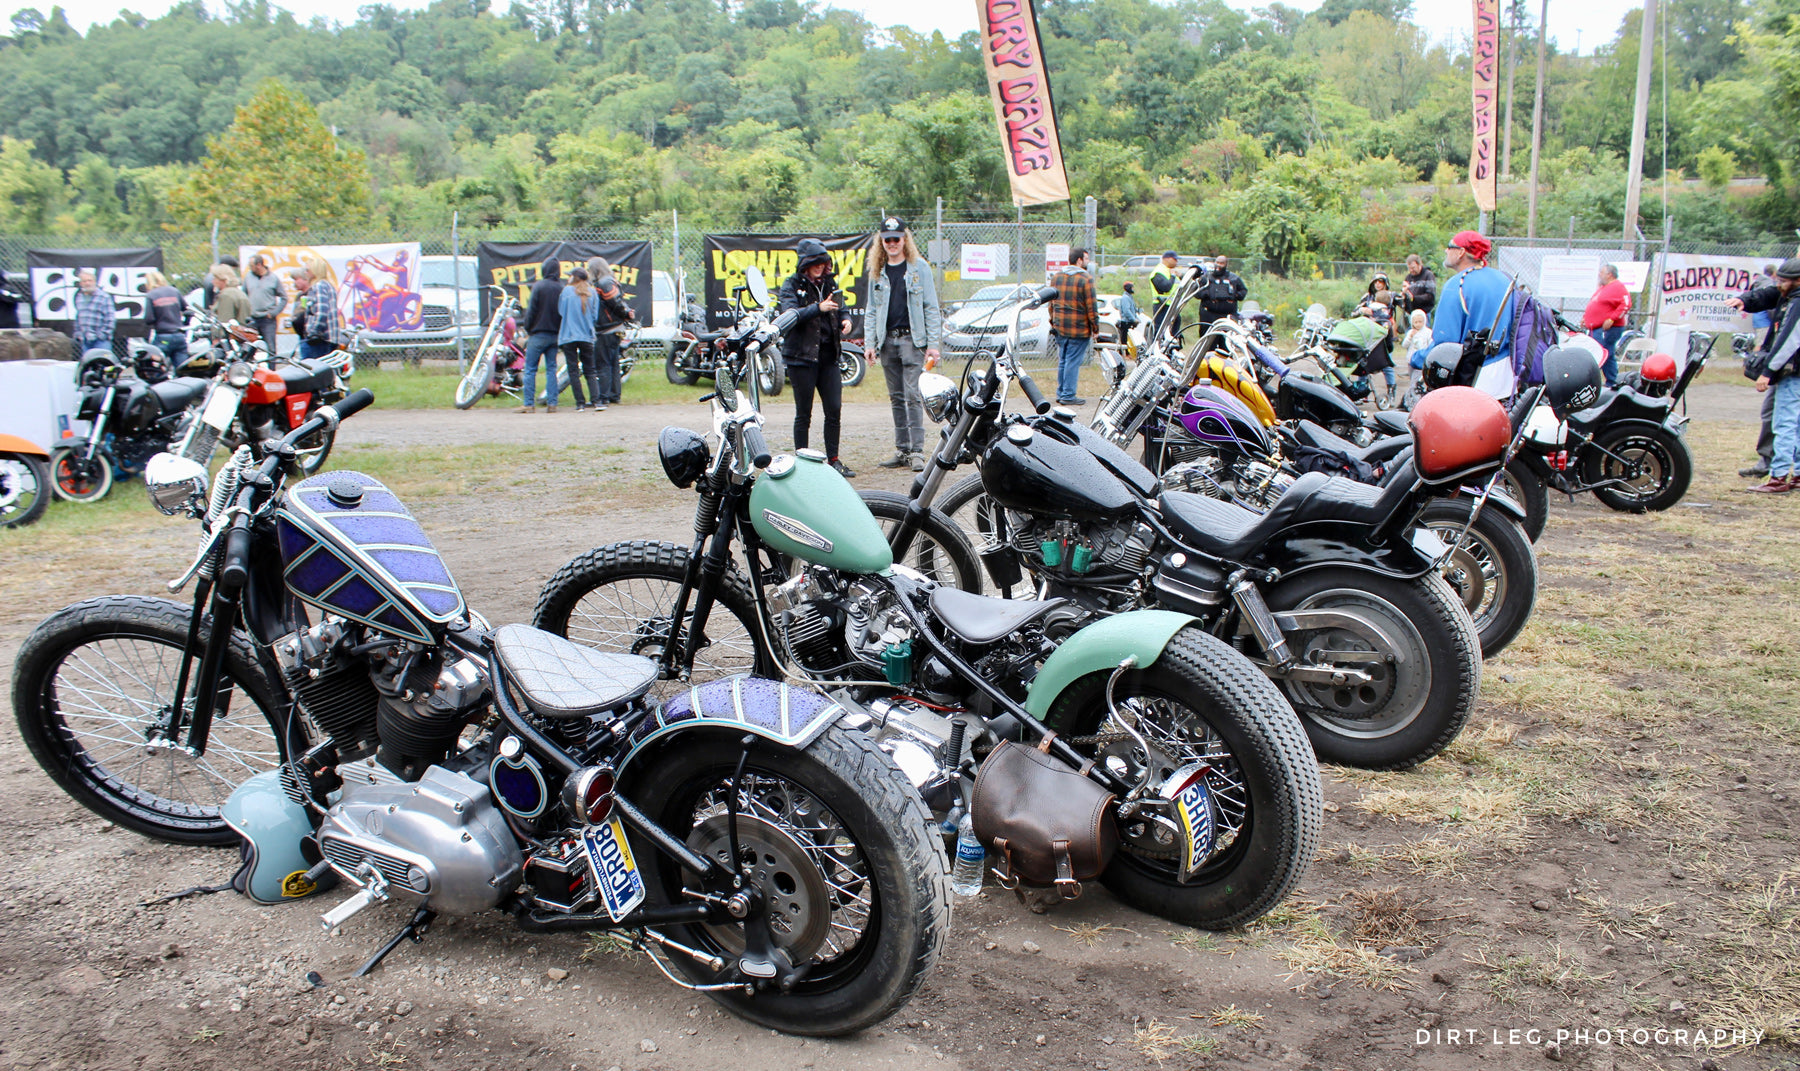 Glory Daze Motorcycle Show Pittsburgh Dirt Leg Photography